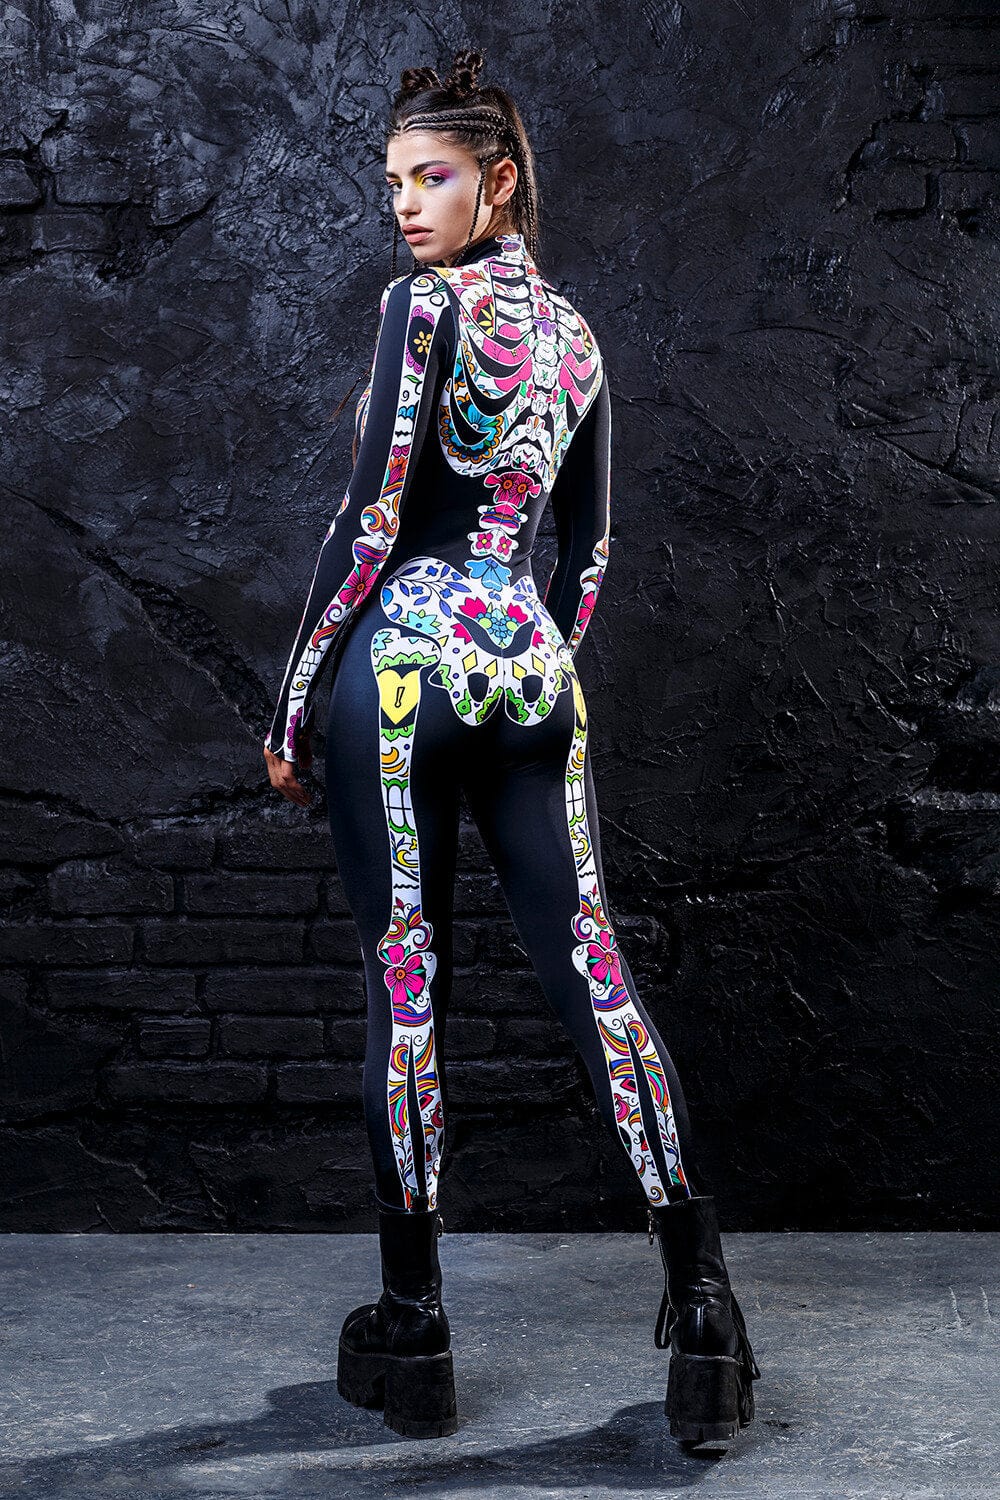 Bohemian Skeleton Costume